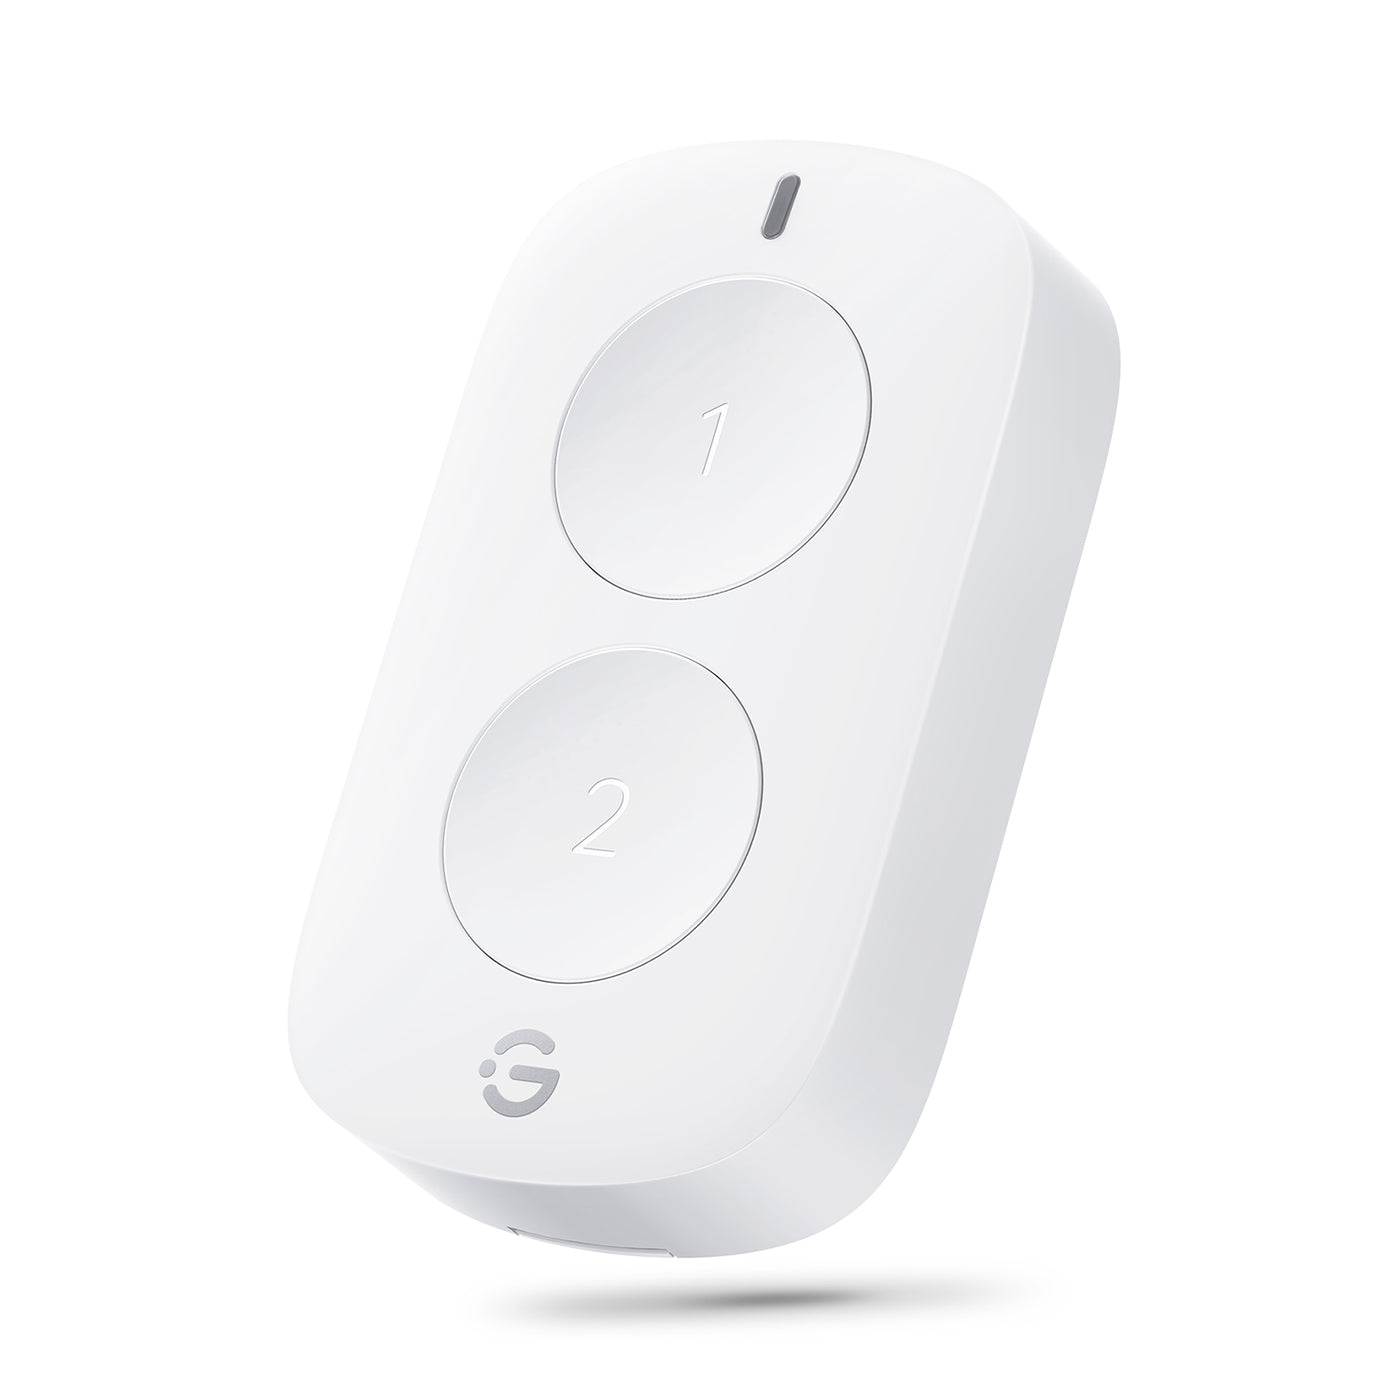 GoveeLife Smart Mini Double Button Switch